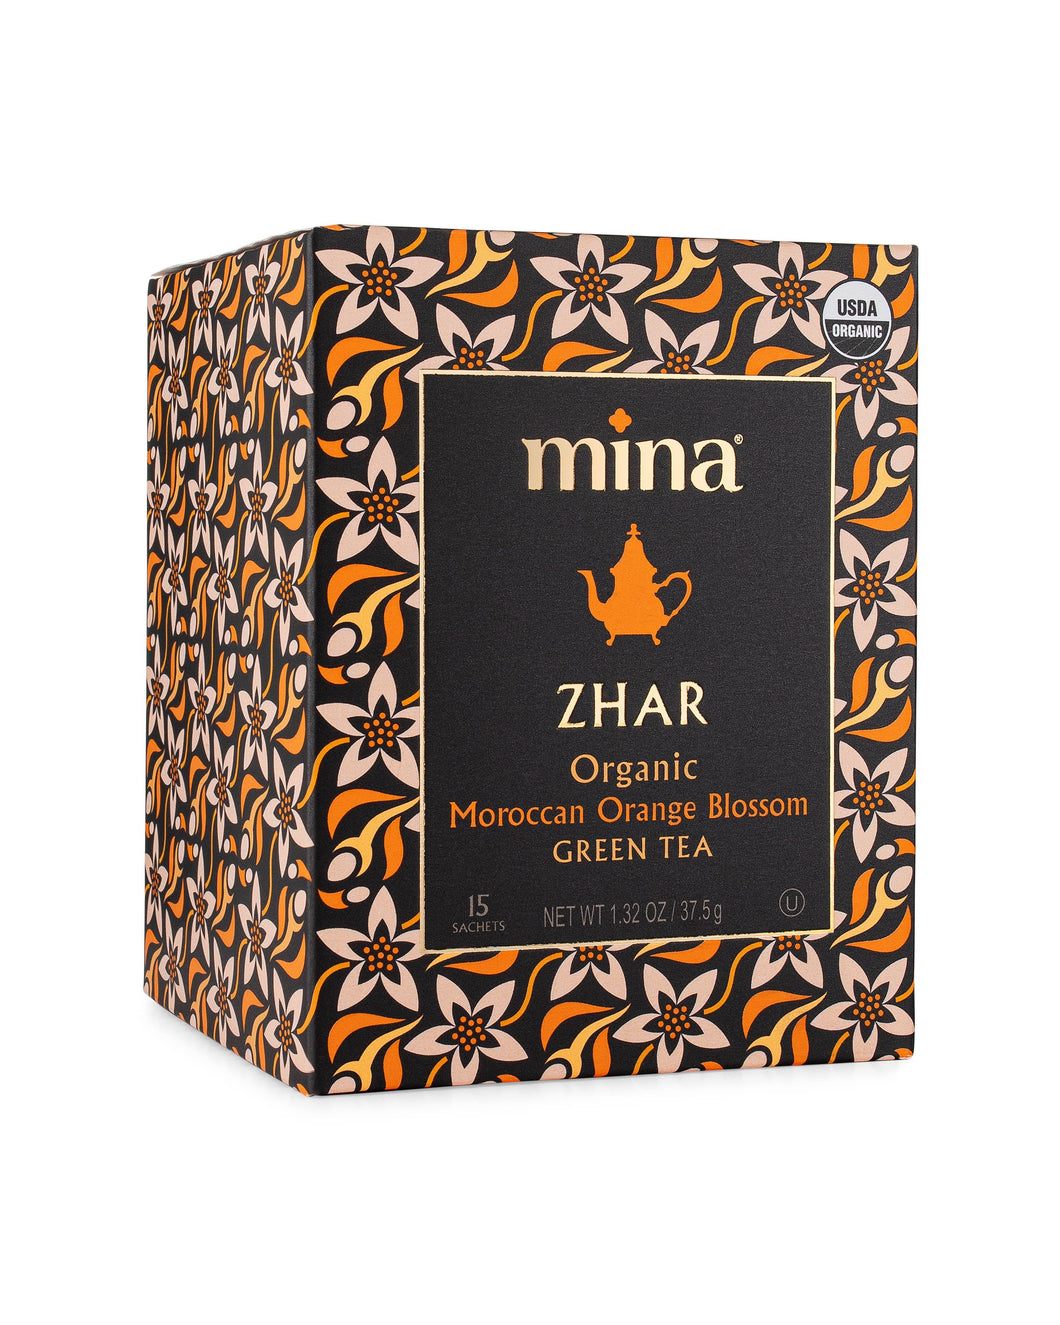 Mina - 15ct Zhar Organic Moroccan Orange Blossom Green Tea